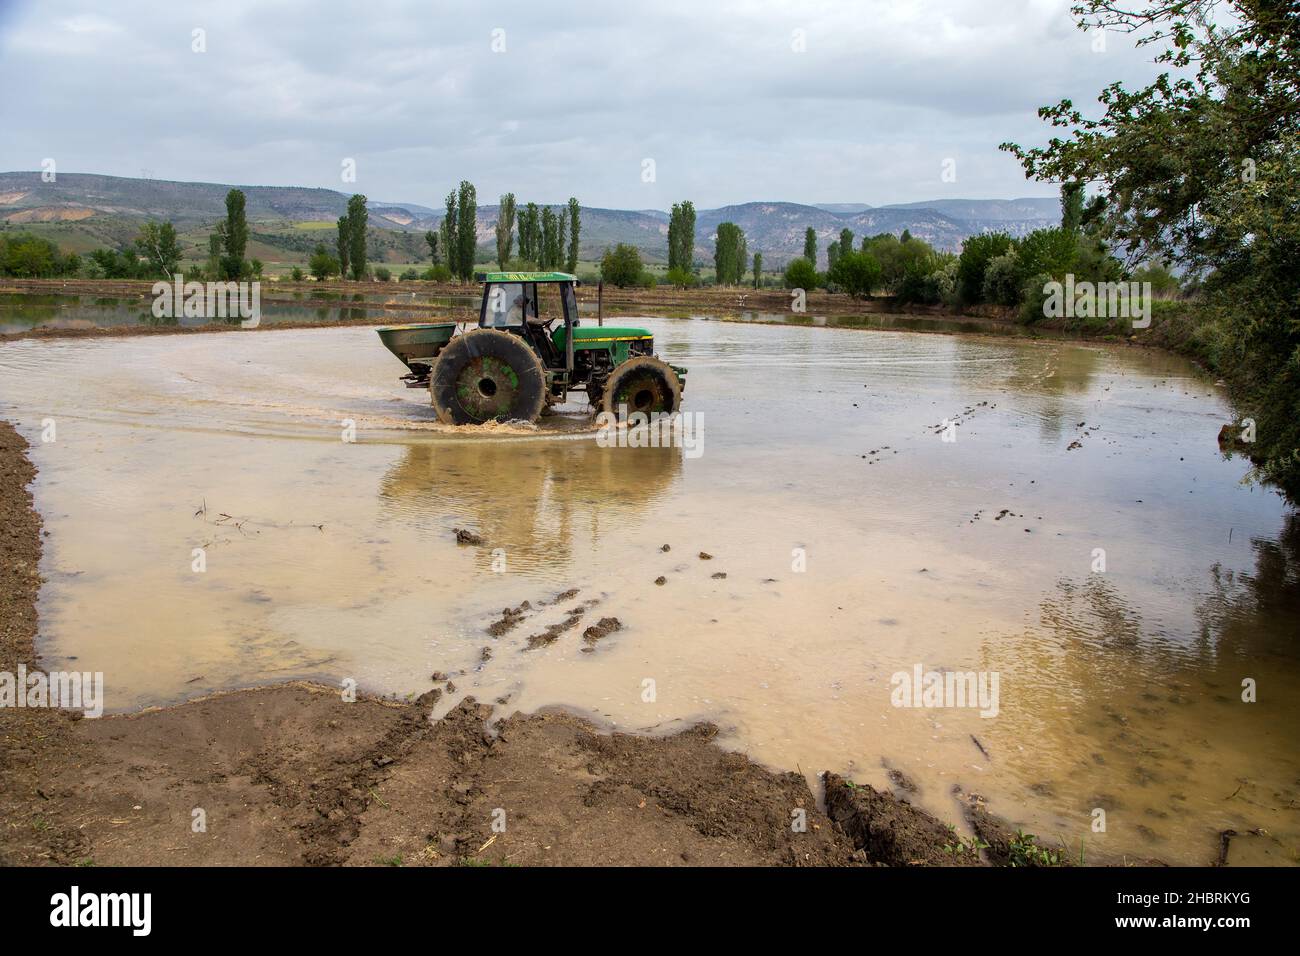 Ankara,Turkey - 05-13-2016:Tractor driving in paddy field, cloudy sky Stock Photo